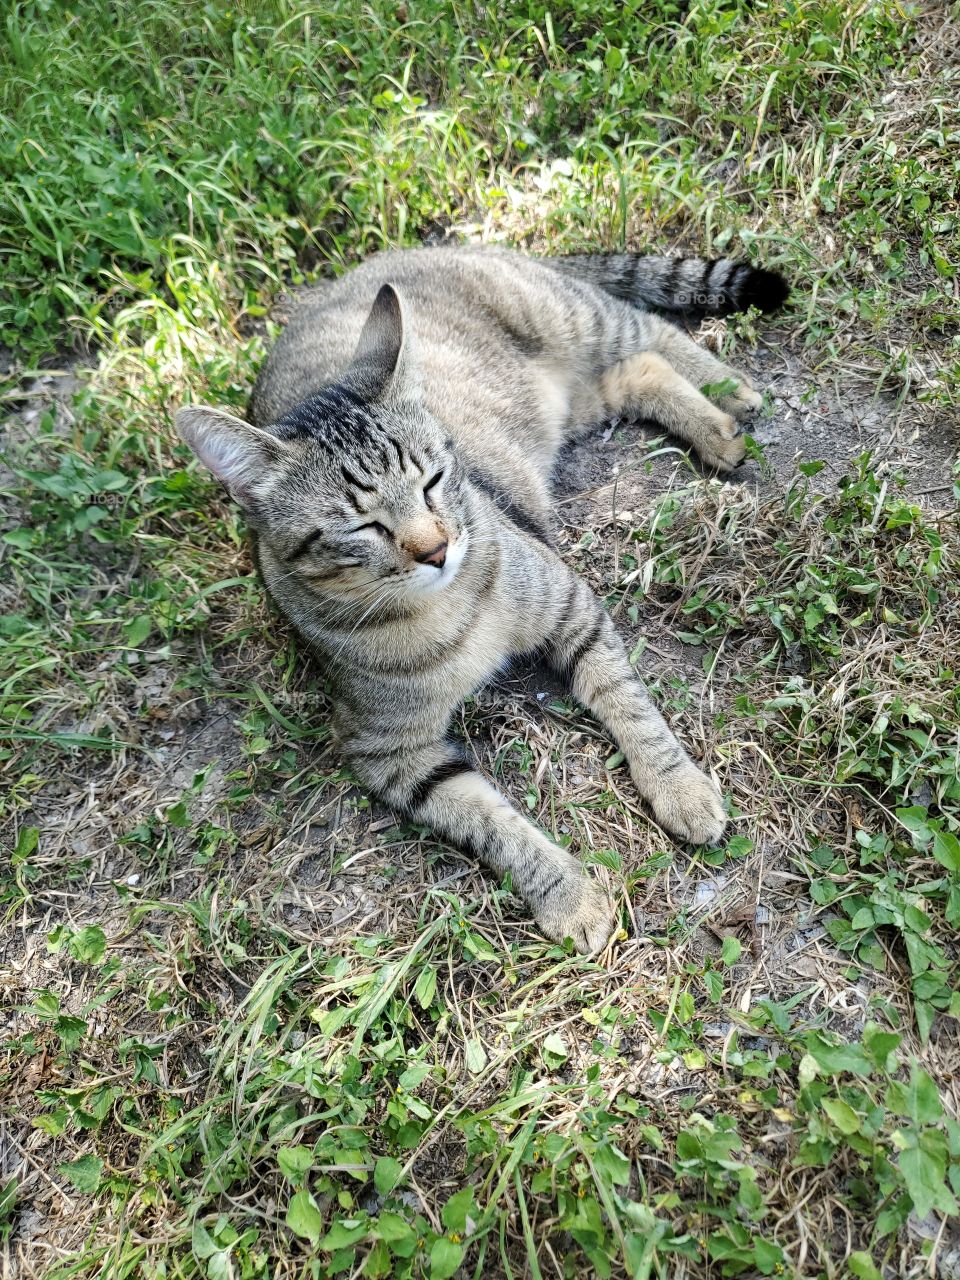 Tabby cat enjoying time in the sun.